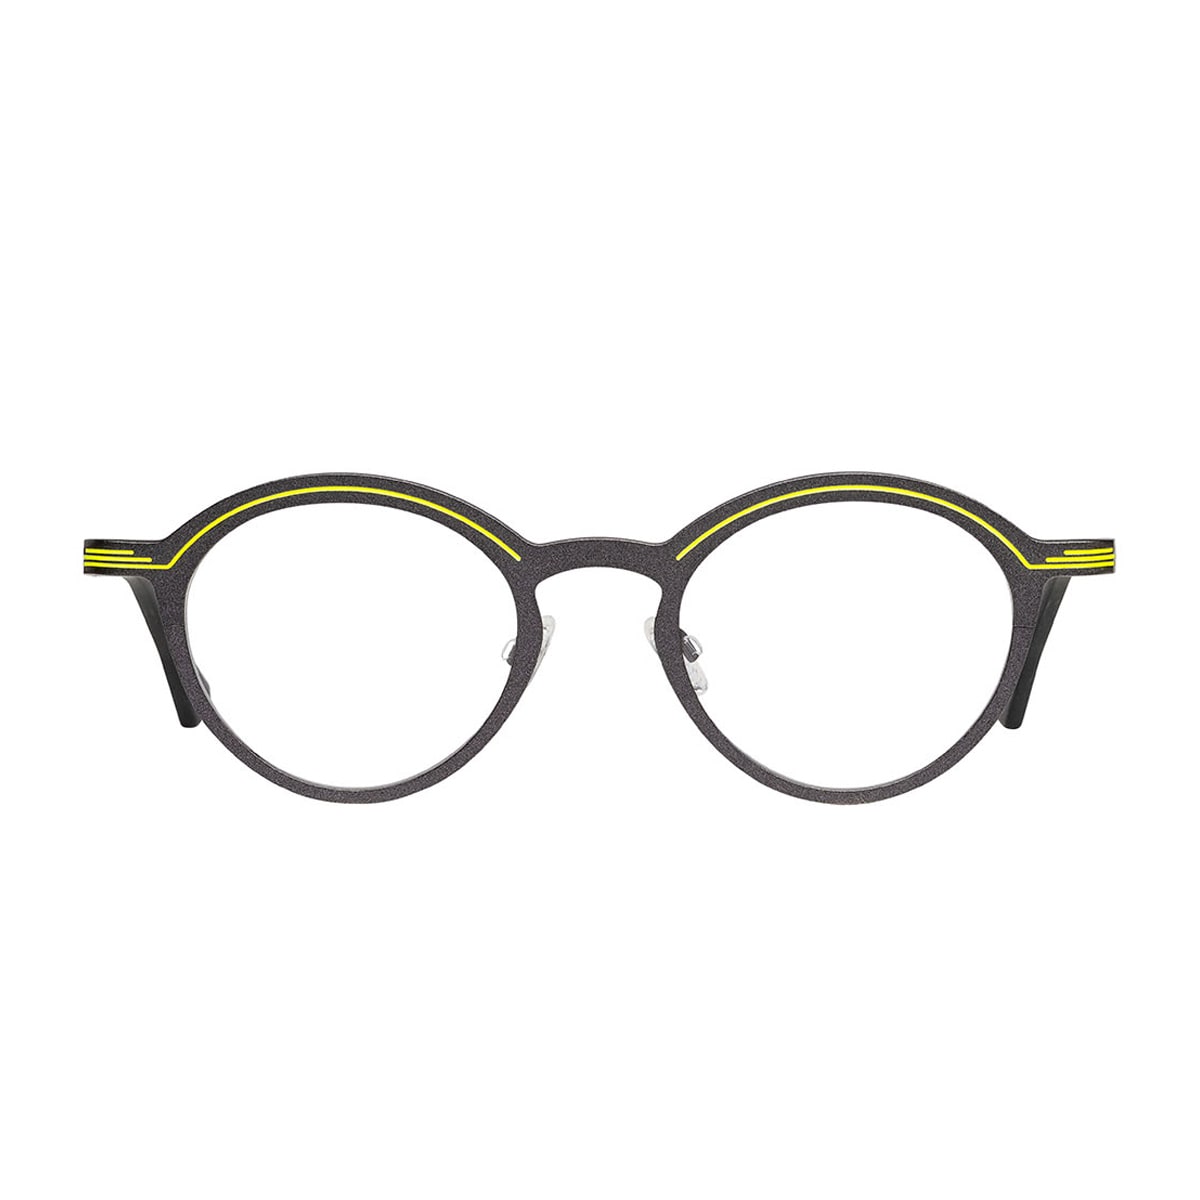 Matttew Tetra 1392 Glasses